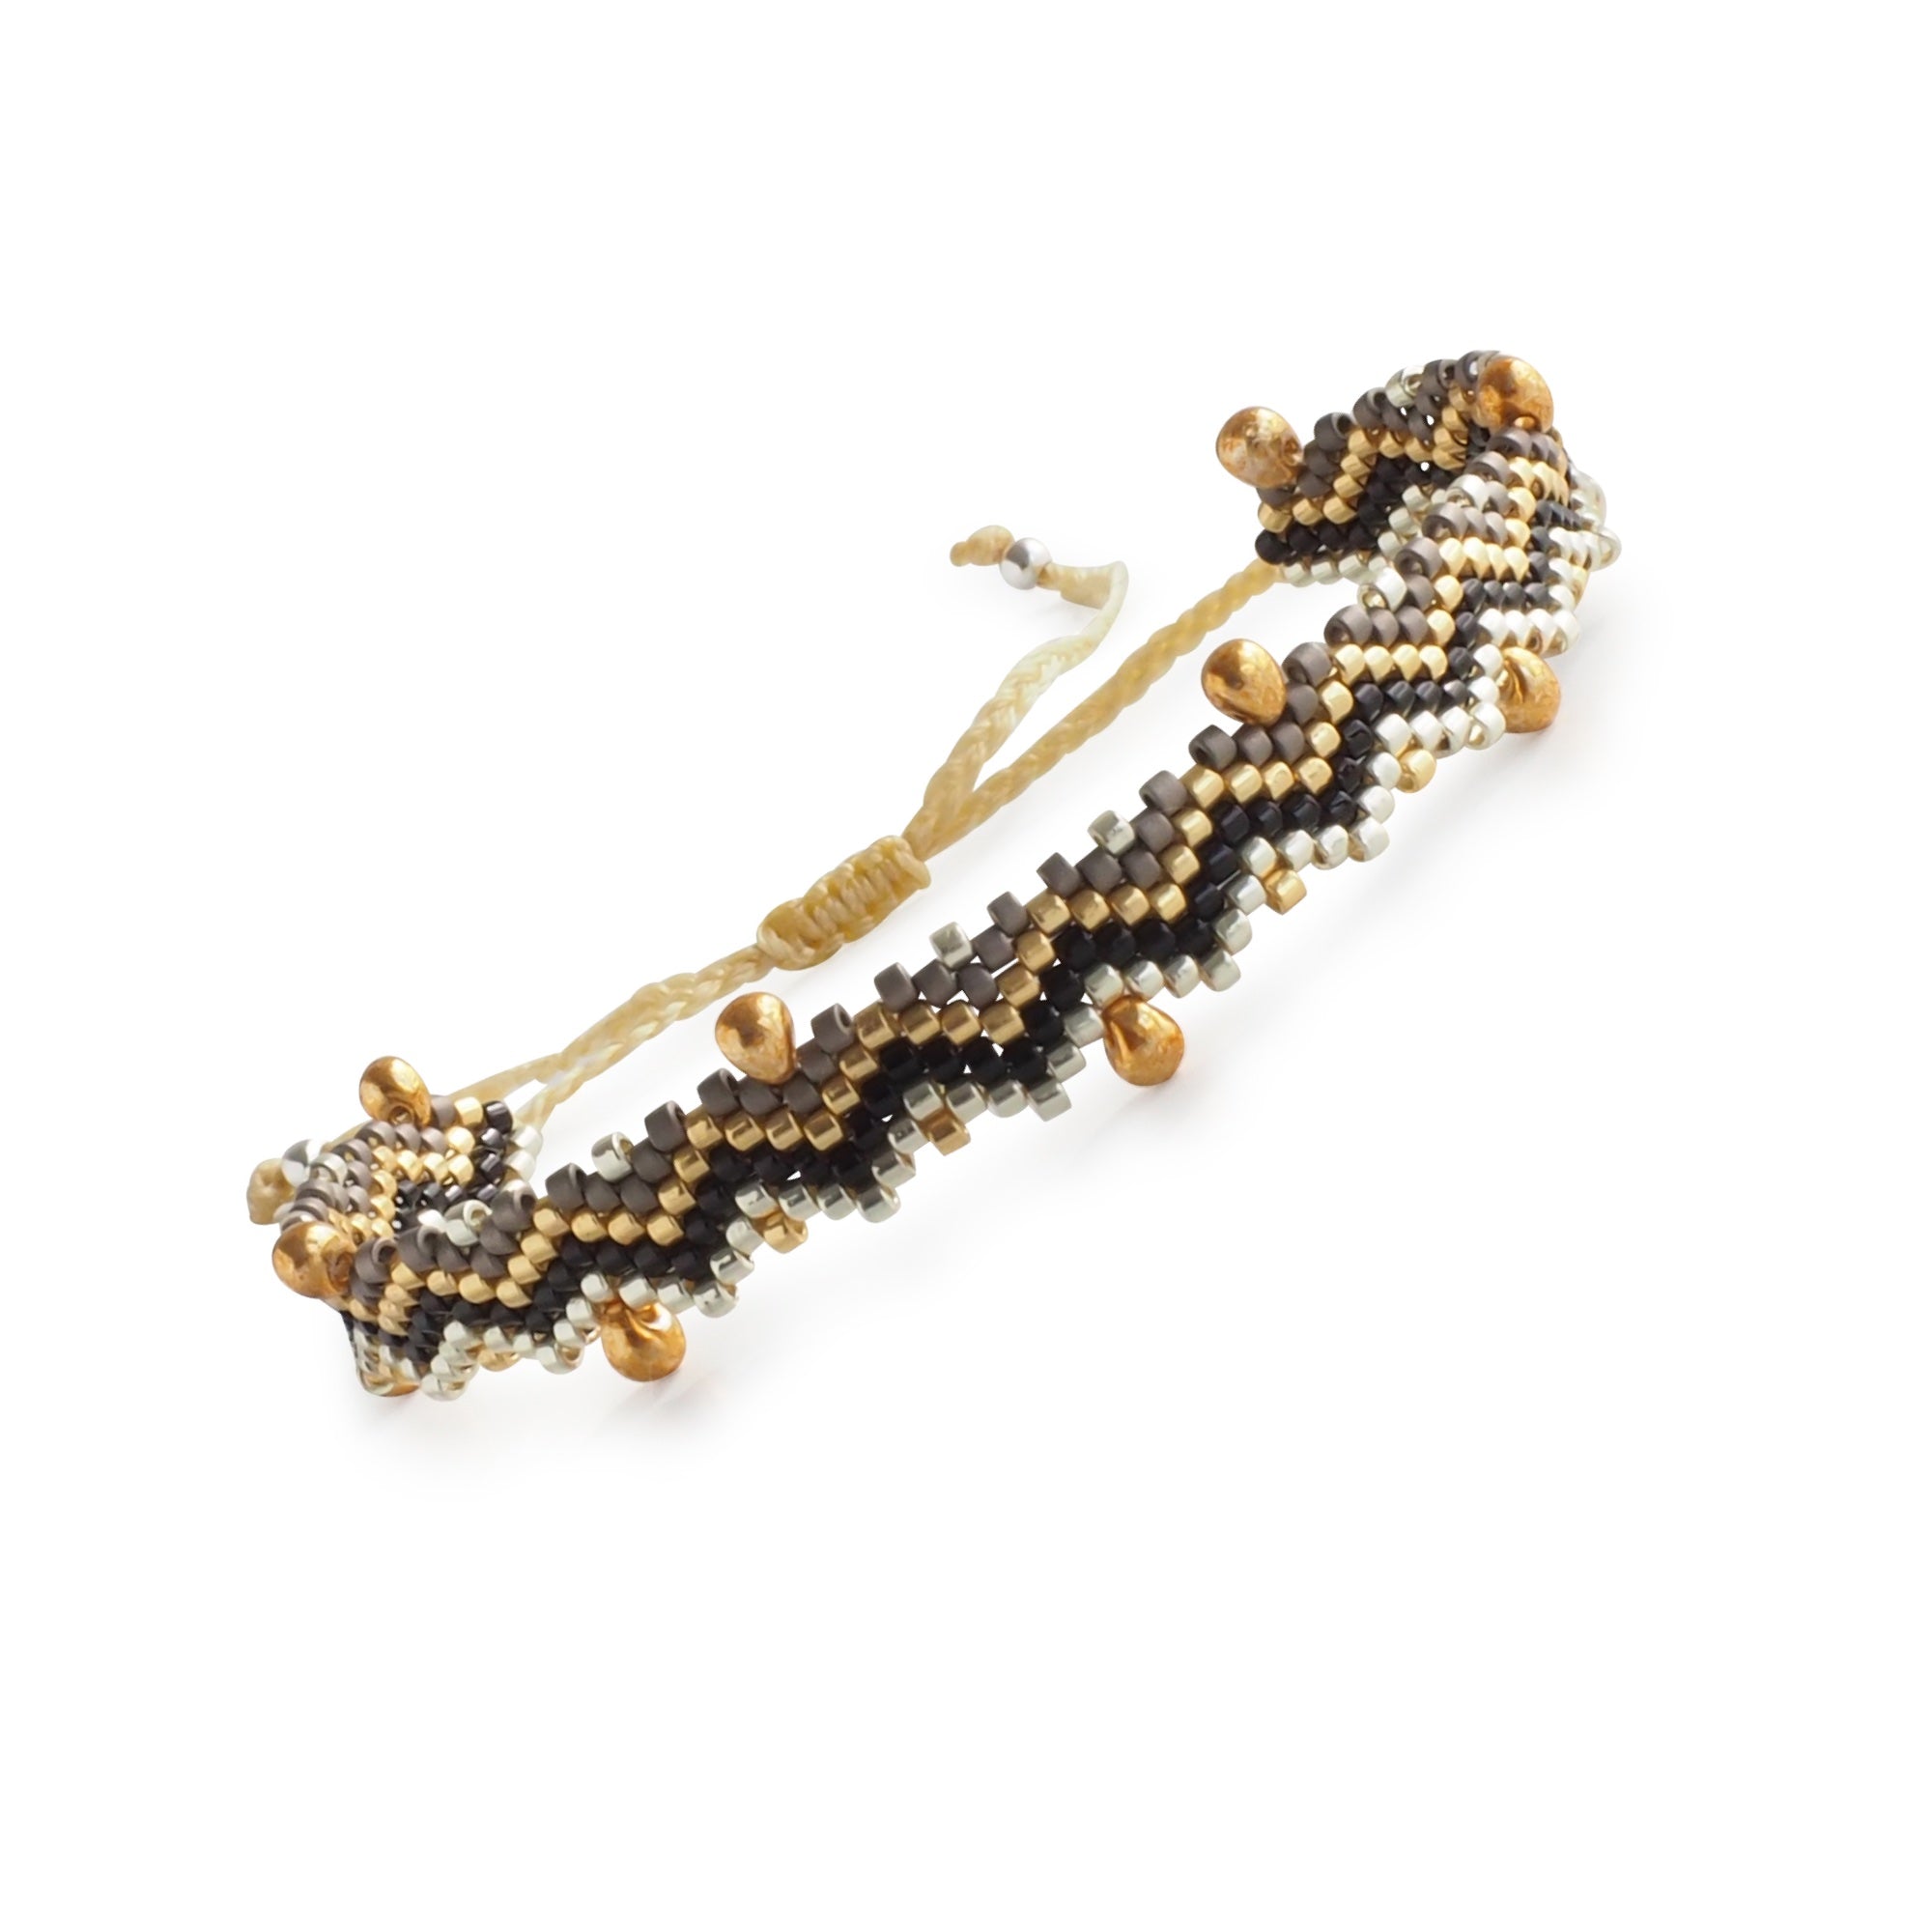 Seed Bead Loom Bracelet Gold and Black